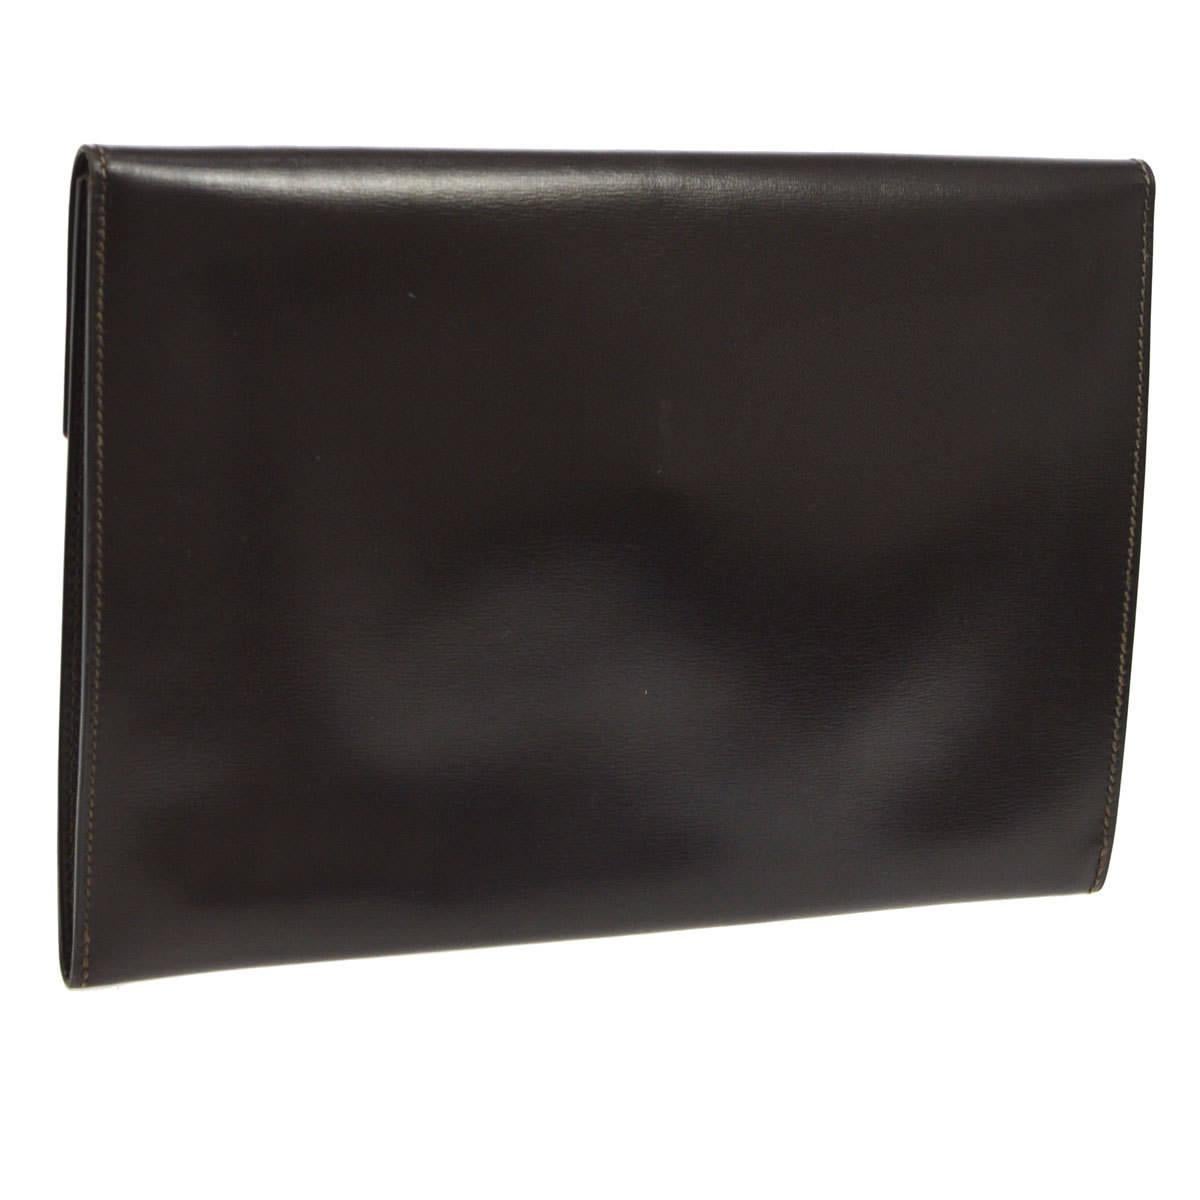 Black Hermes Chocolate Brown 'H' Charm Leather Evening Envelope Clutch Flap Bag